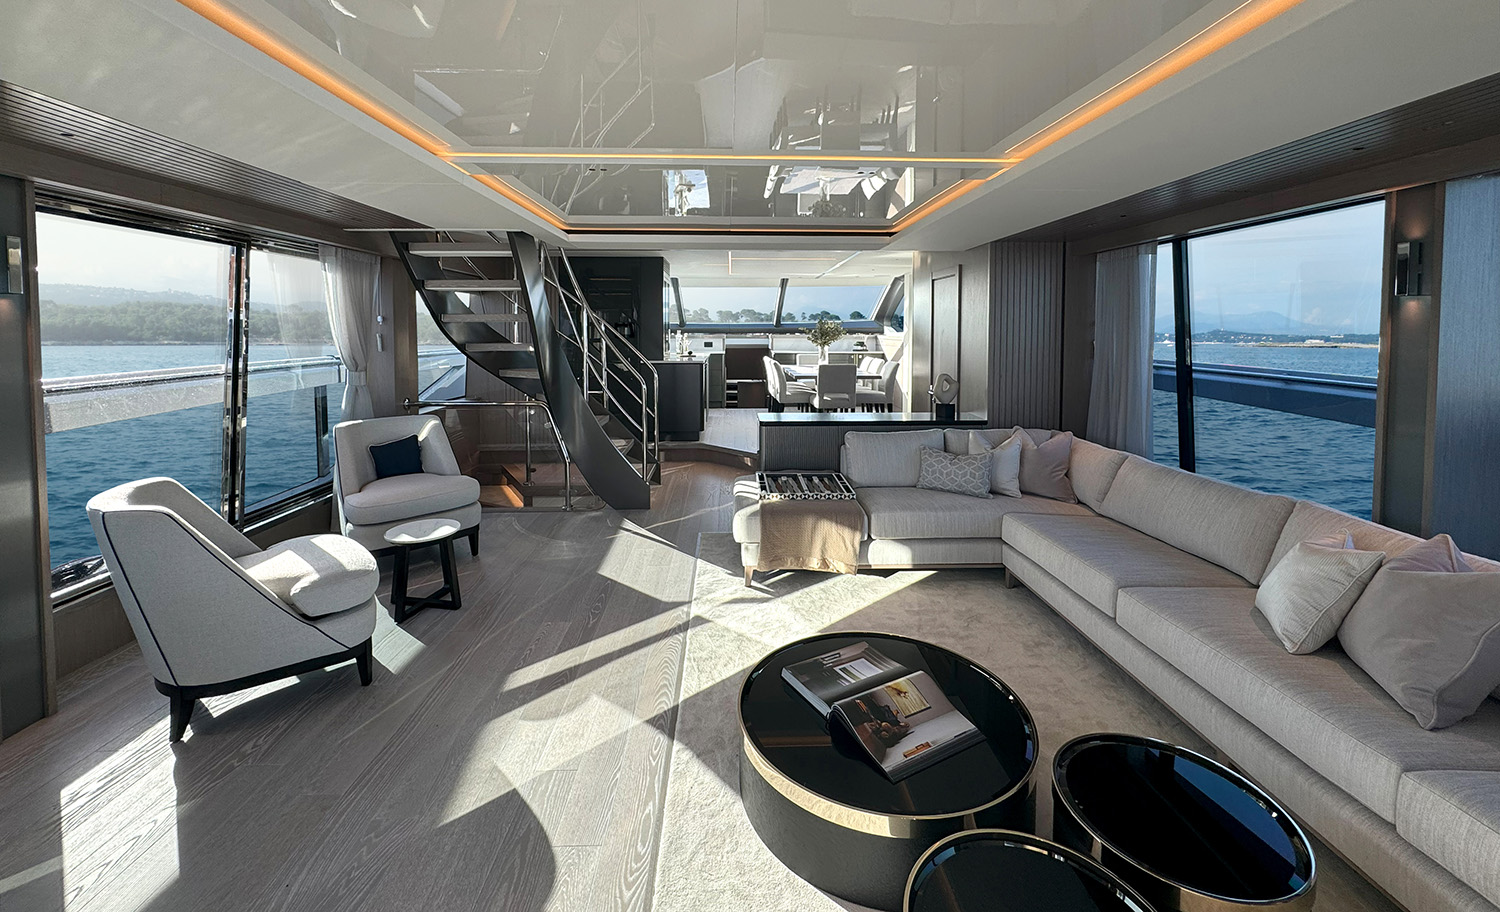 Interior of a Sunseeker luxury yacht